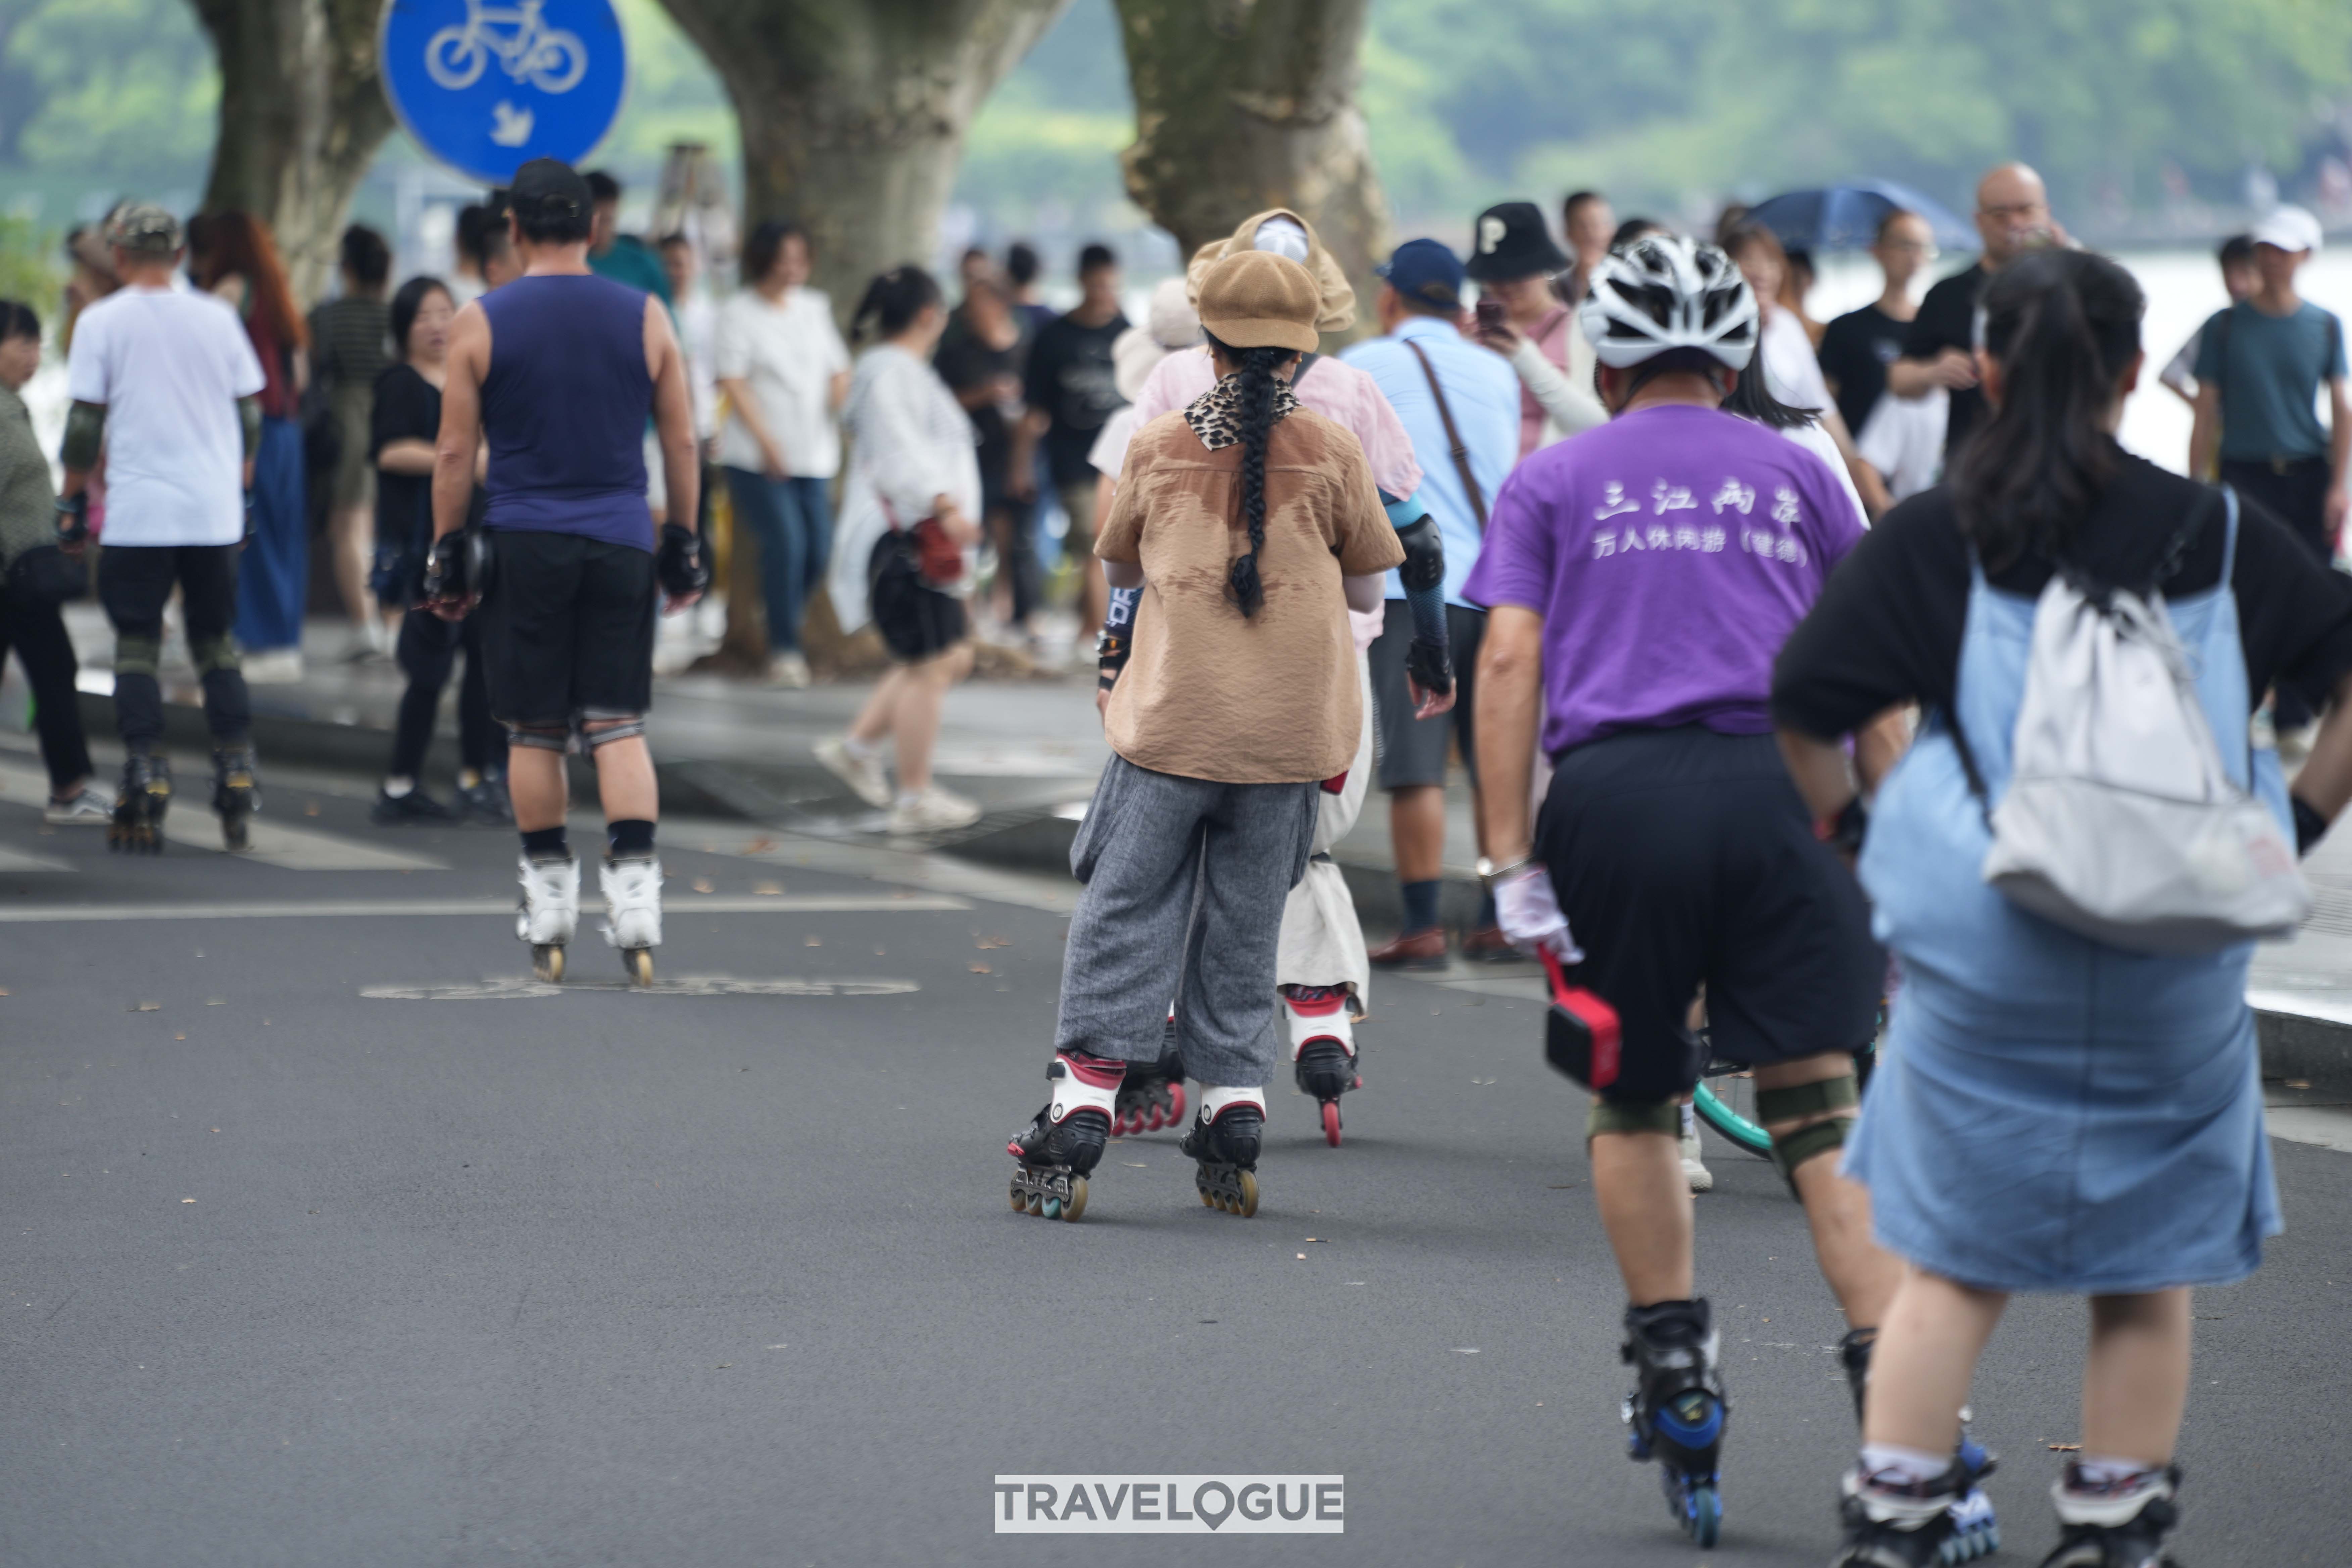 Residents skate near the iconic West Lake in Hangzhou, Zhejiang Province. /CGTN